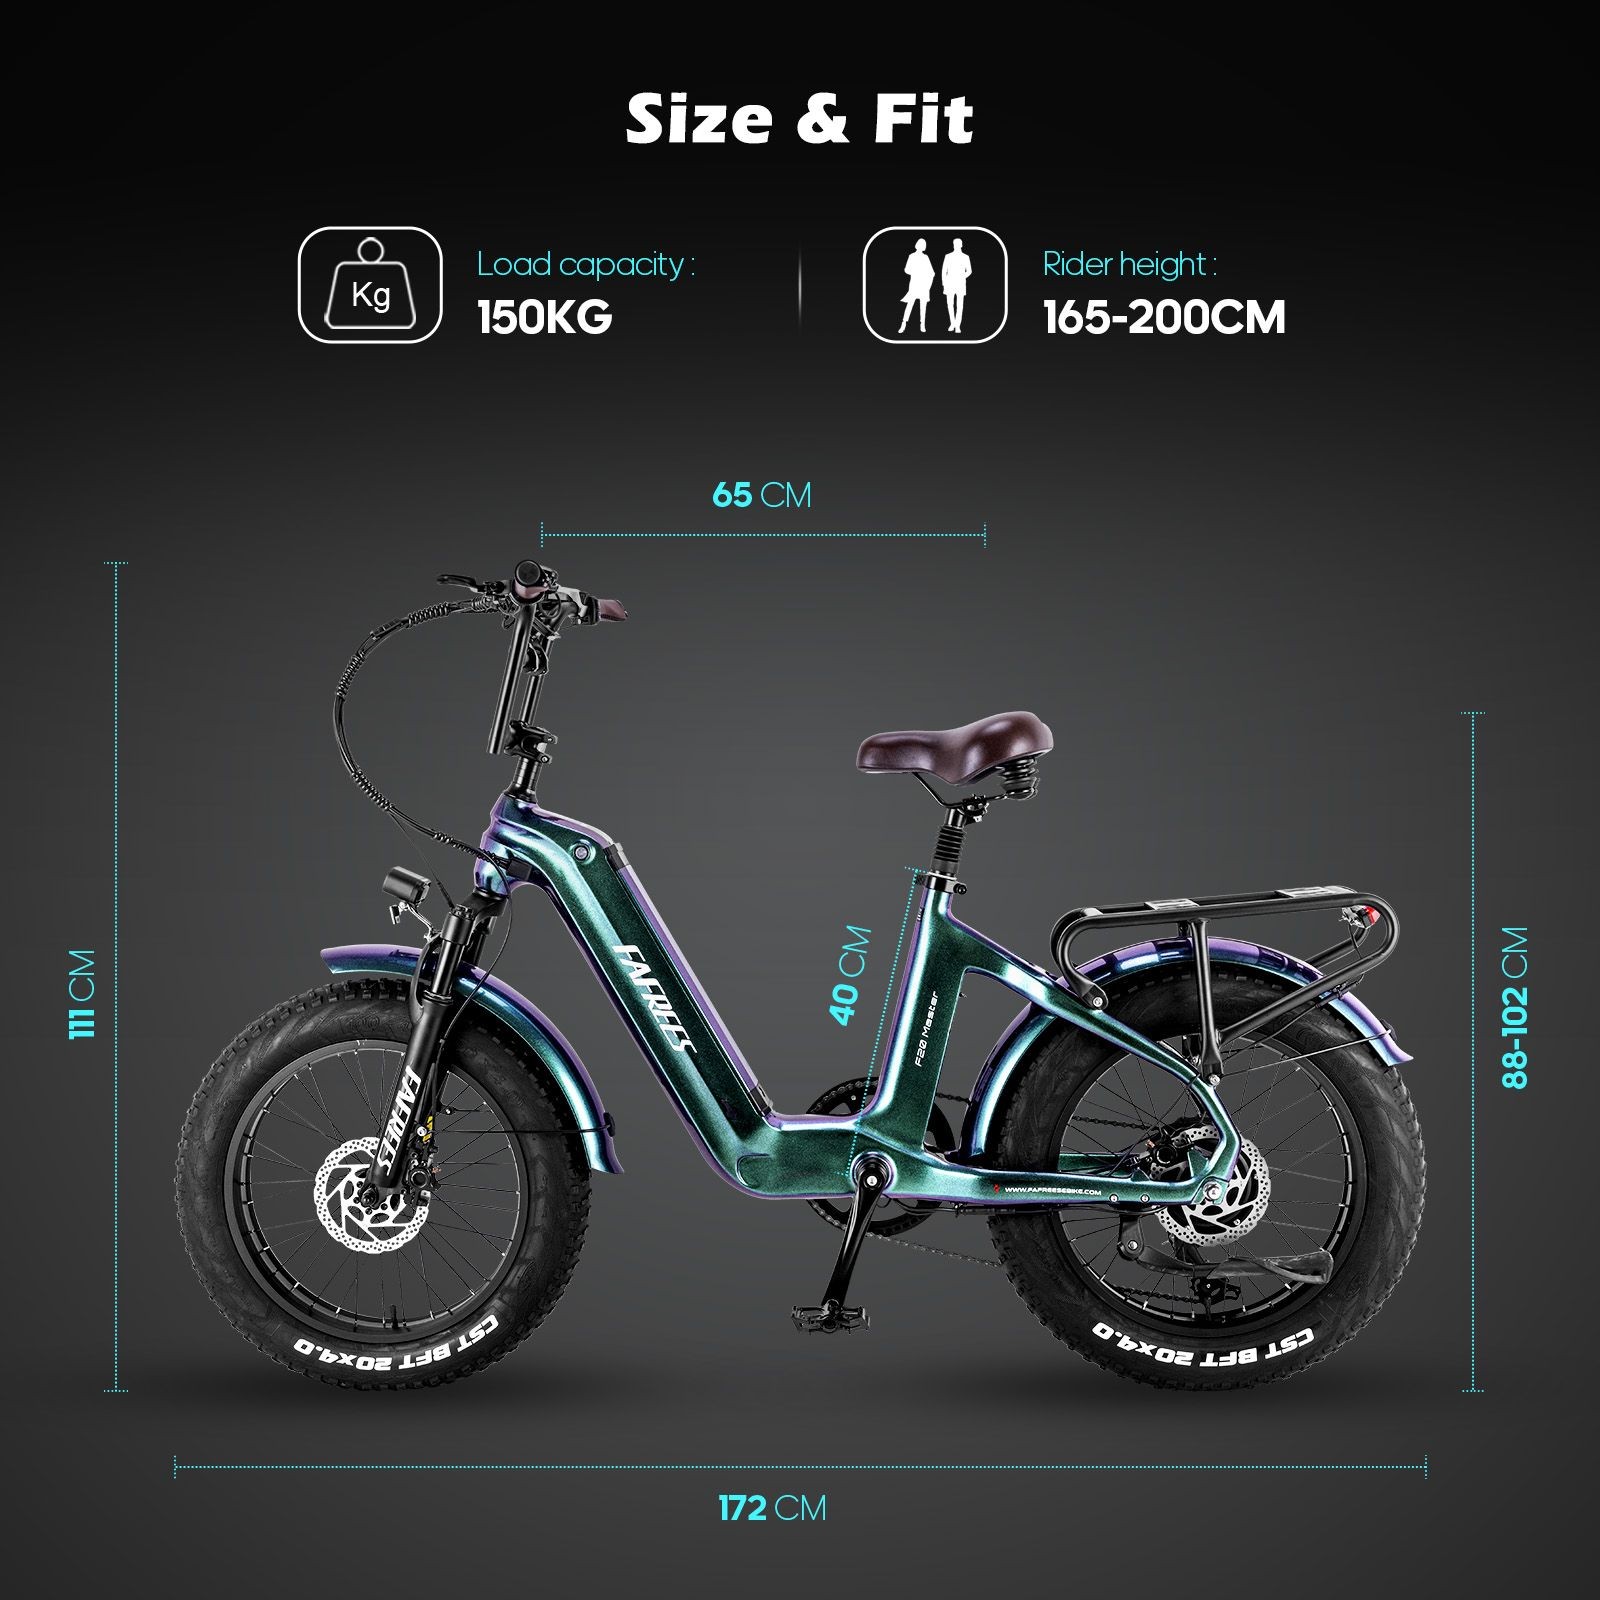 Bicicleta electrica FAREES F20 Master E-bike 20*4.0 Anvelopa 500W Albastru